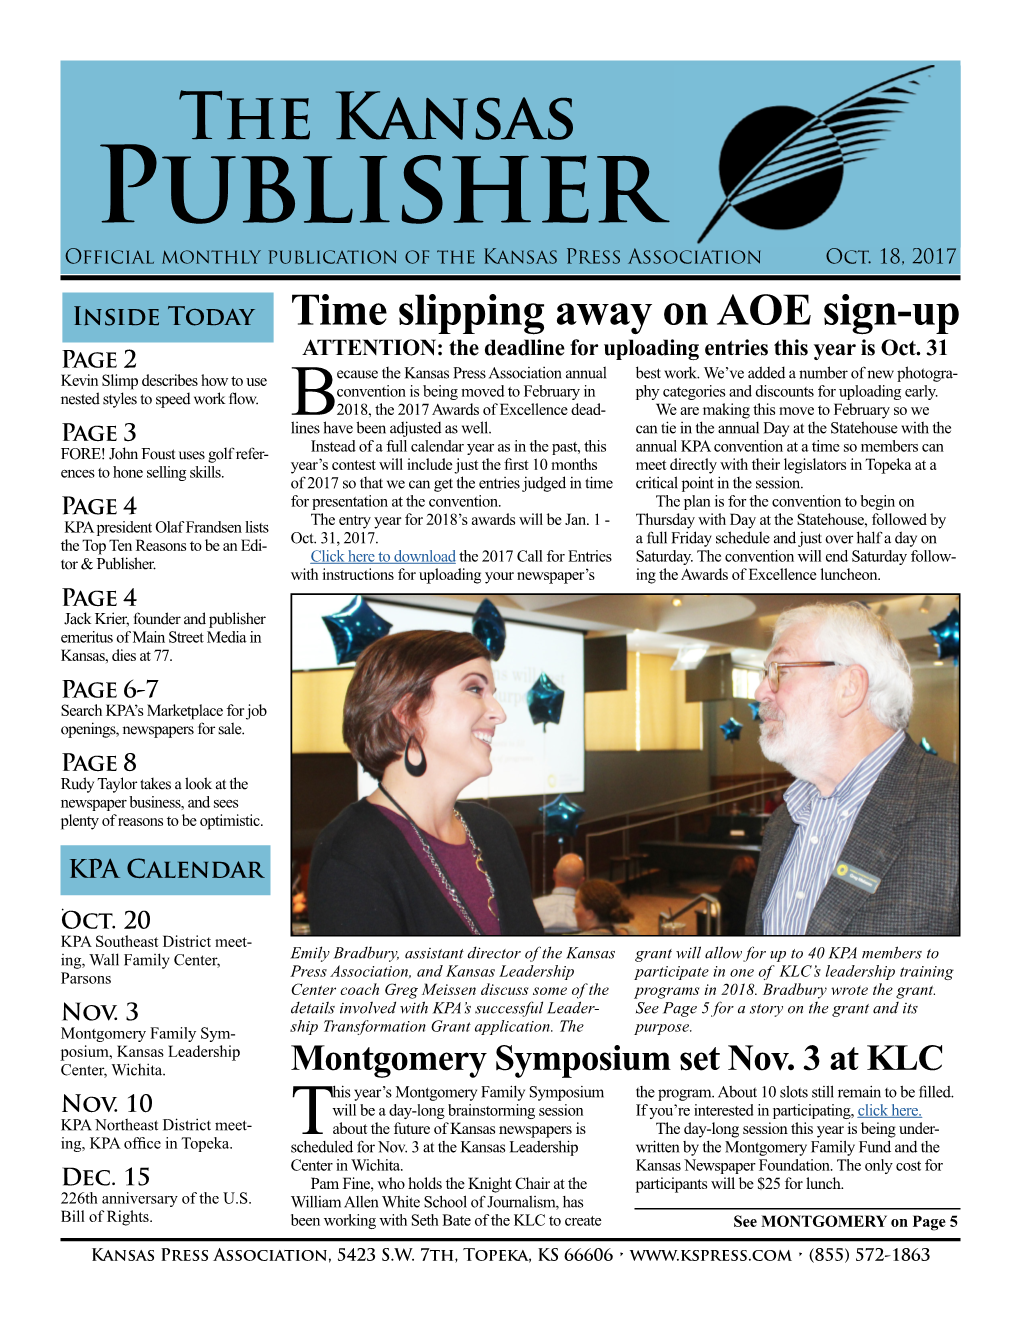 Kansas Publisher Official Monthly Publication of the Kansas Press Association Oct